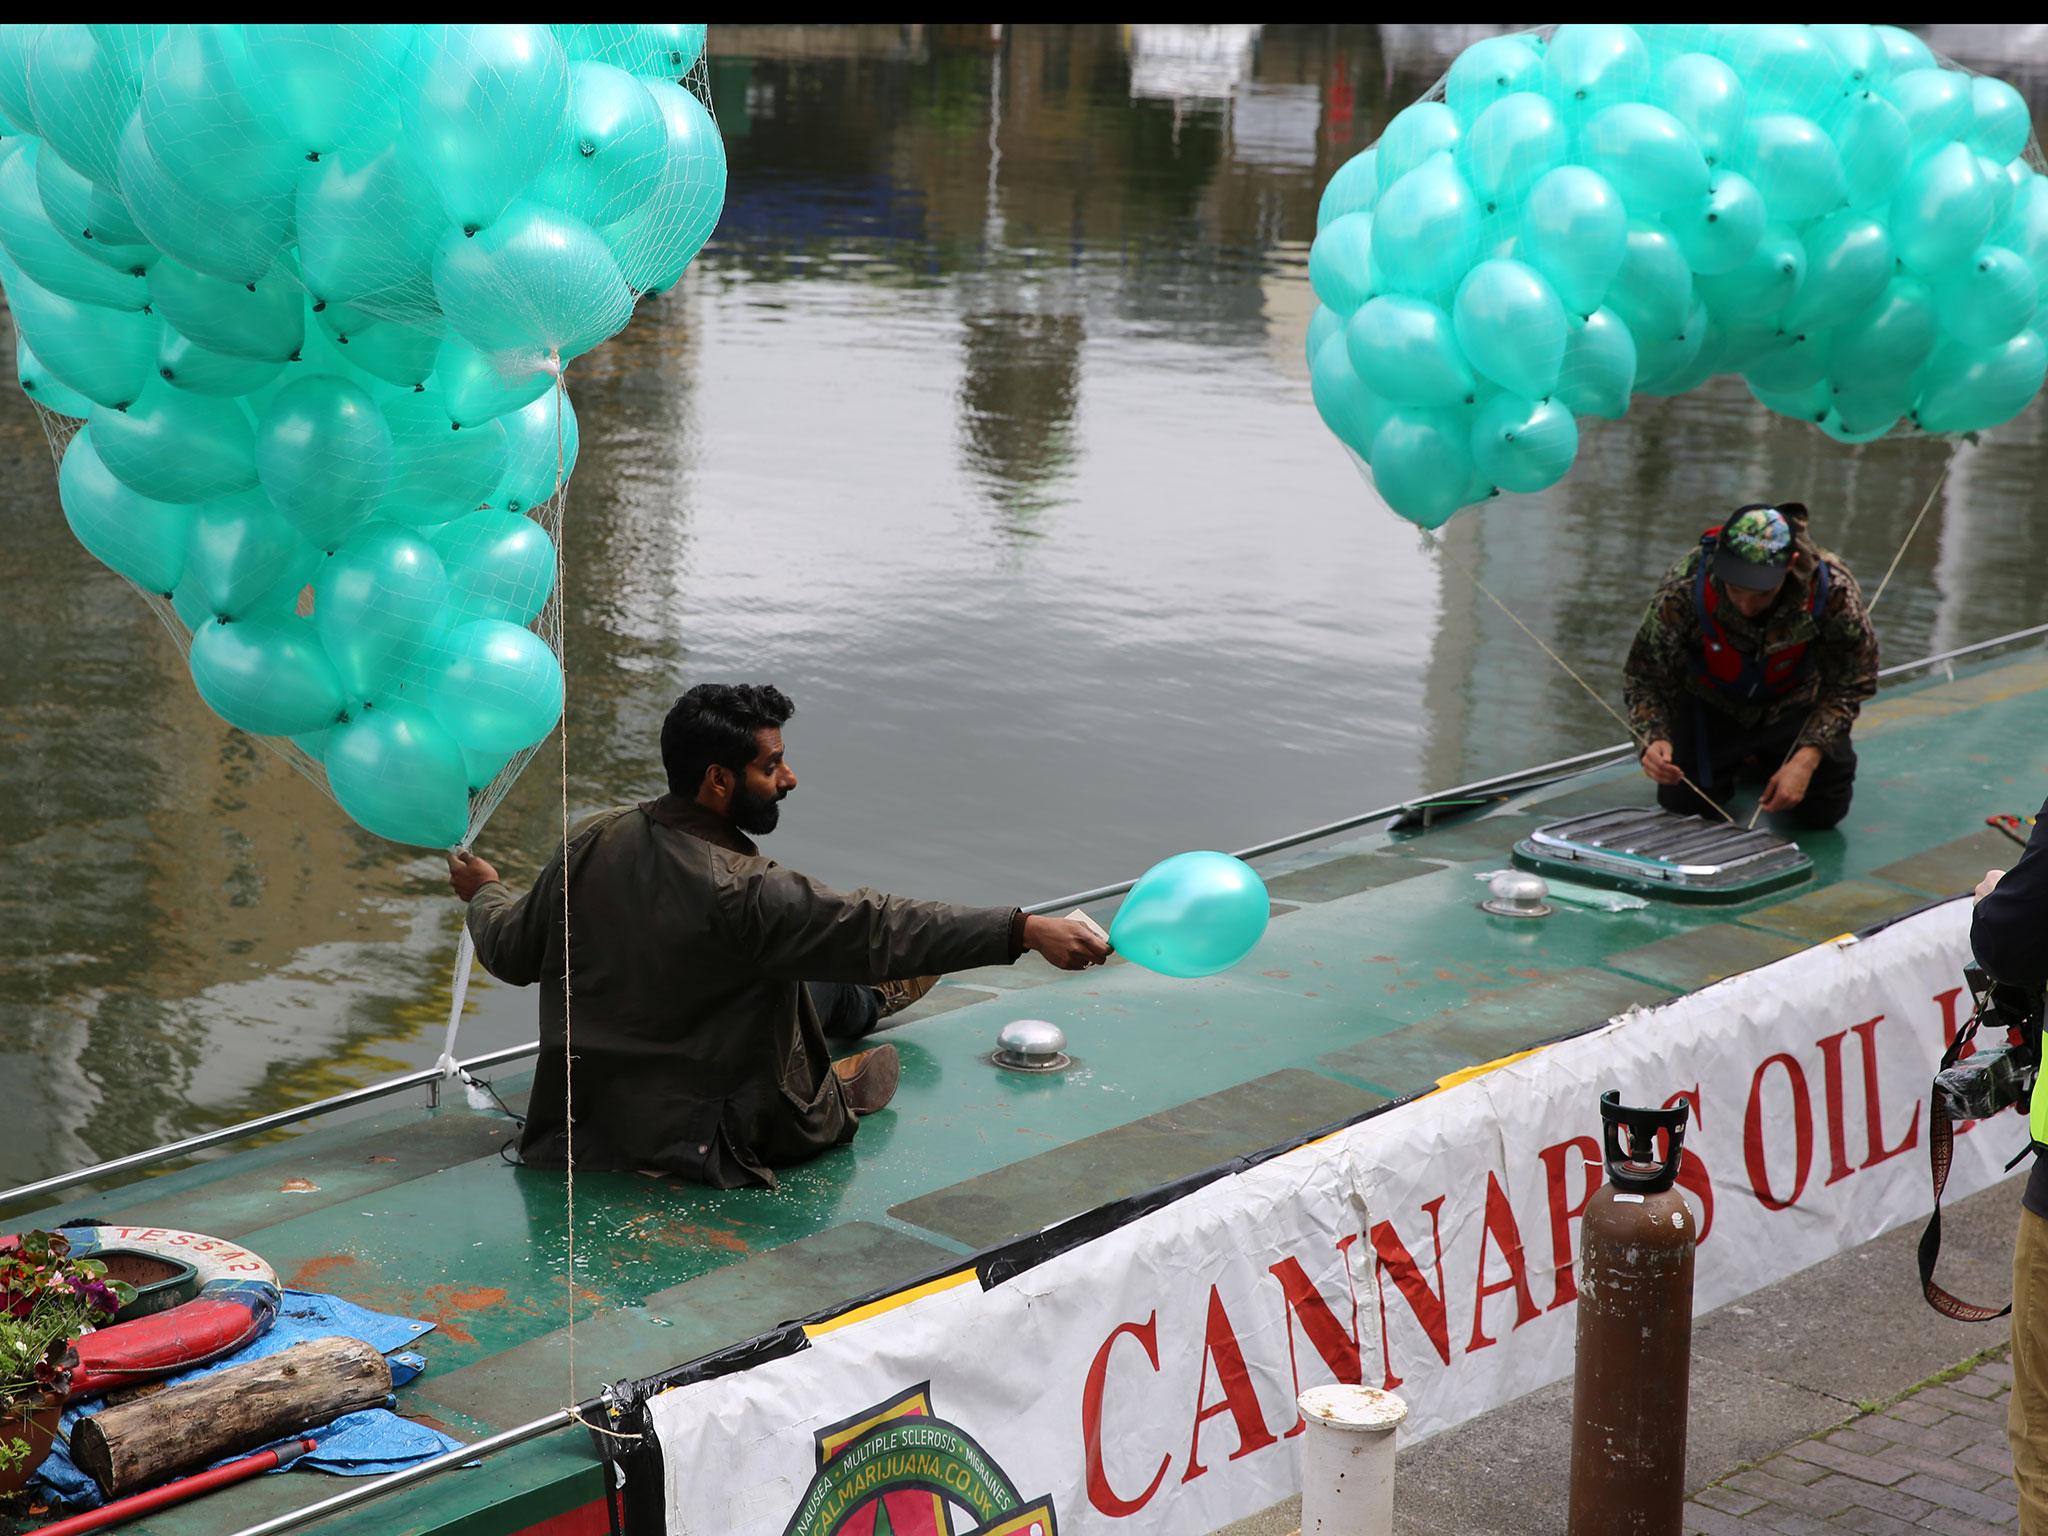 Krishna Andavolu onboard a boat protesting against the UK's marijuana laws. (Viceland)